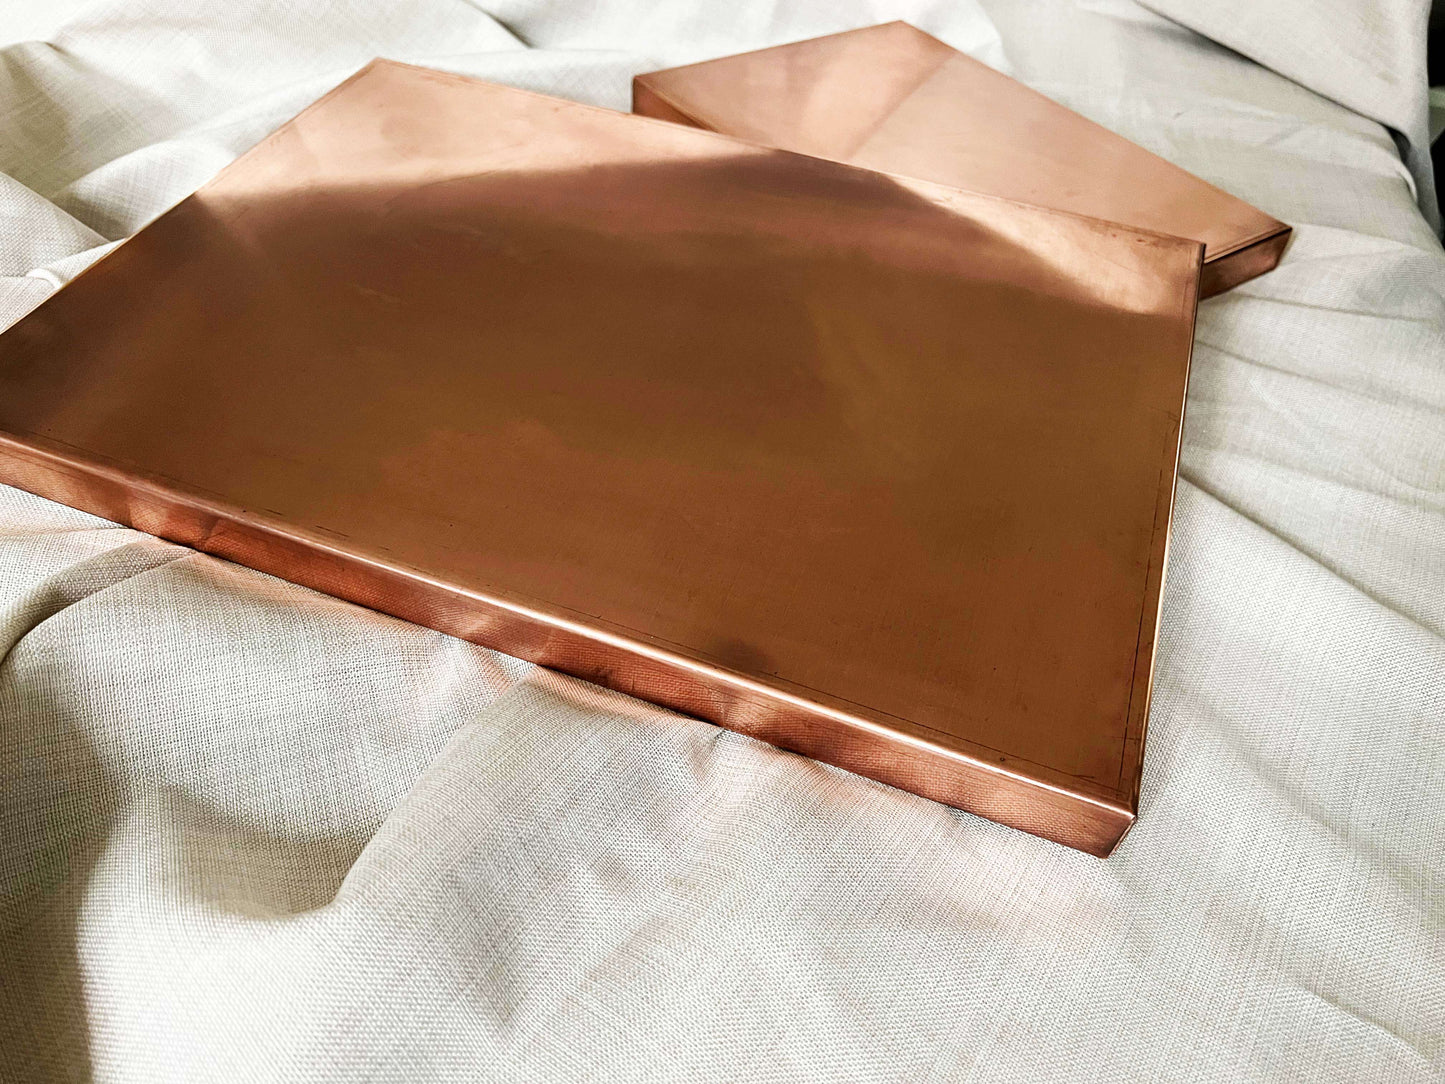 Copper Baking Sheet - Half-Sheet